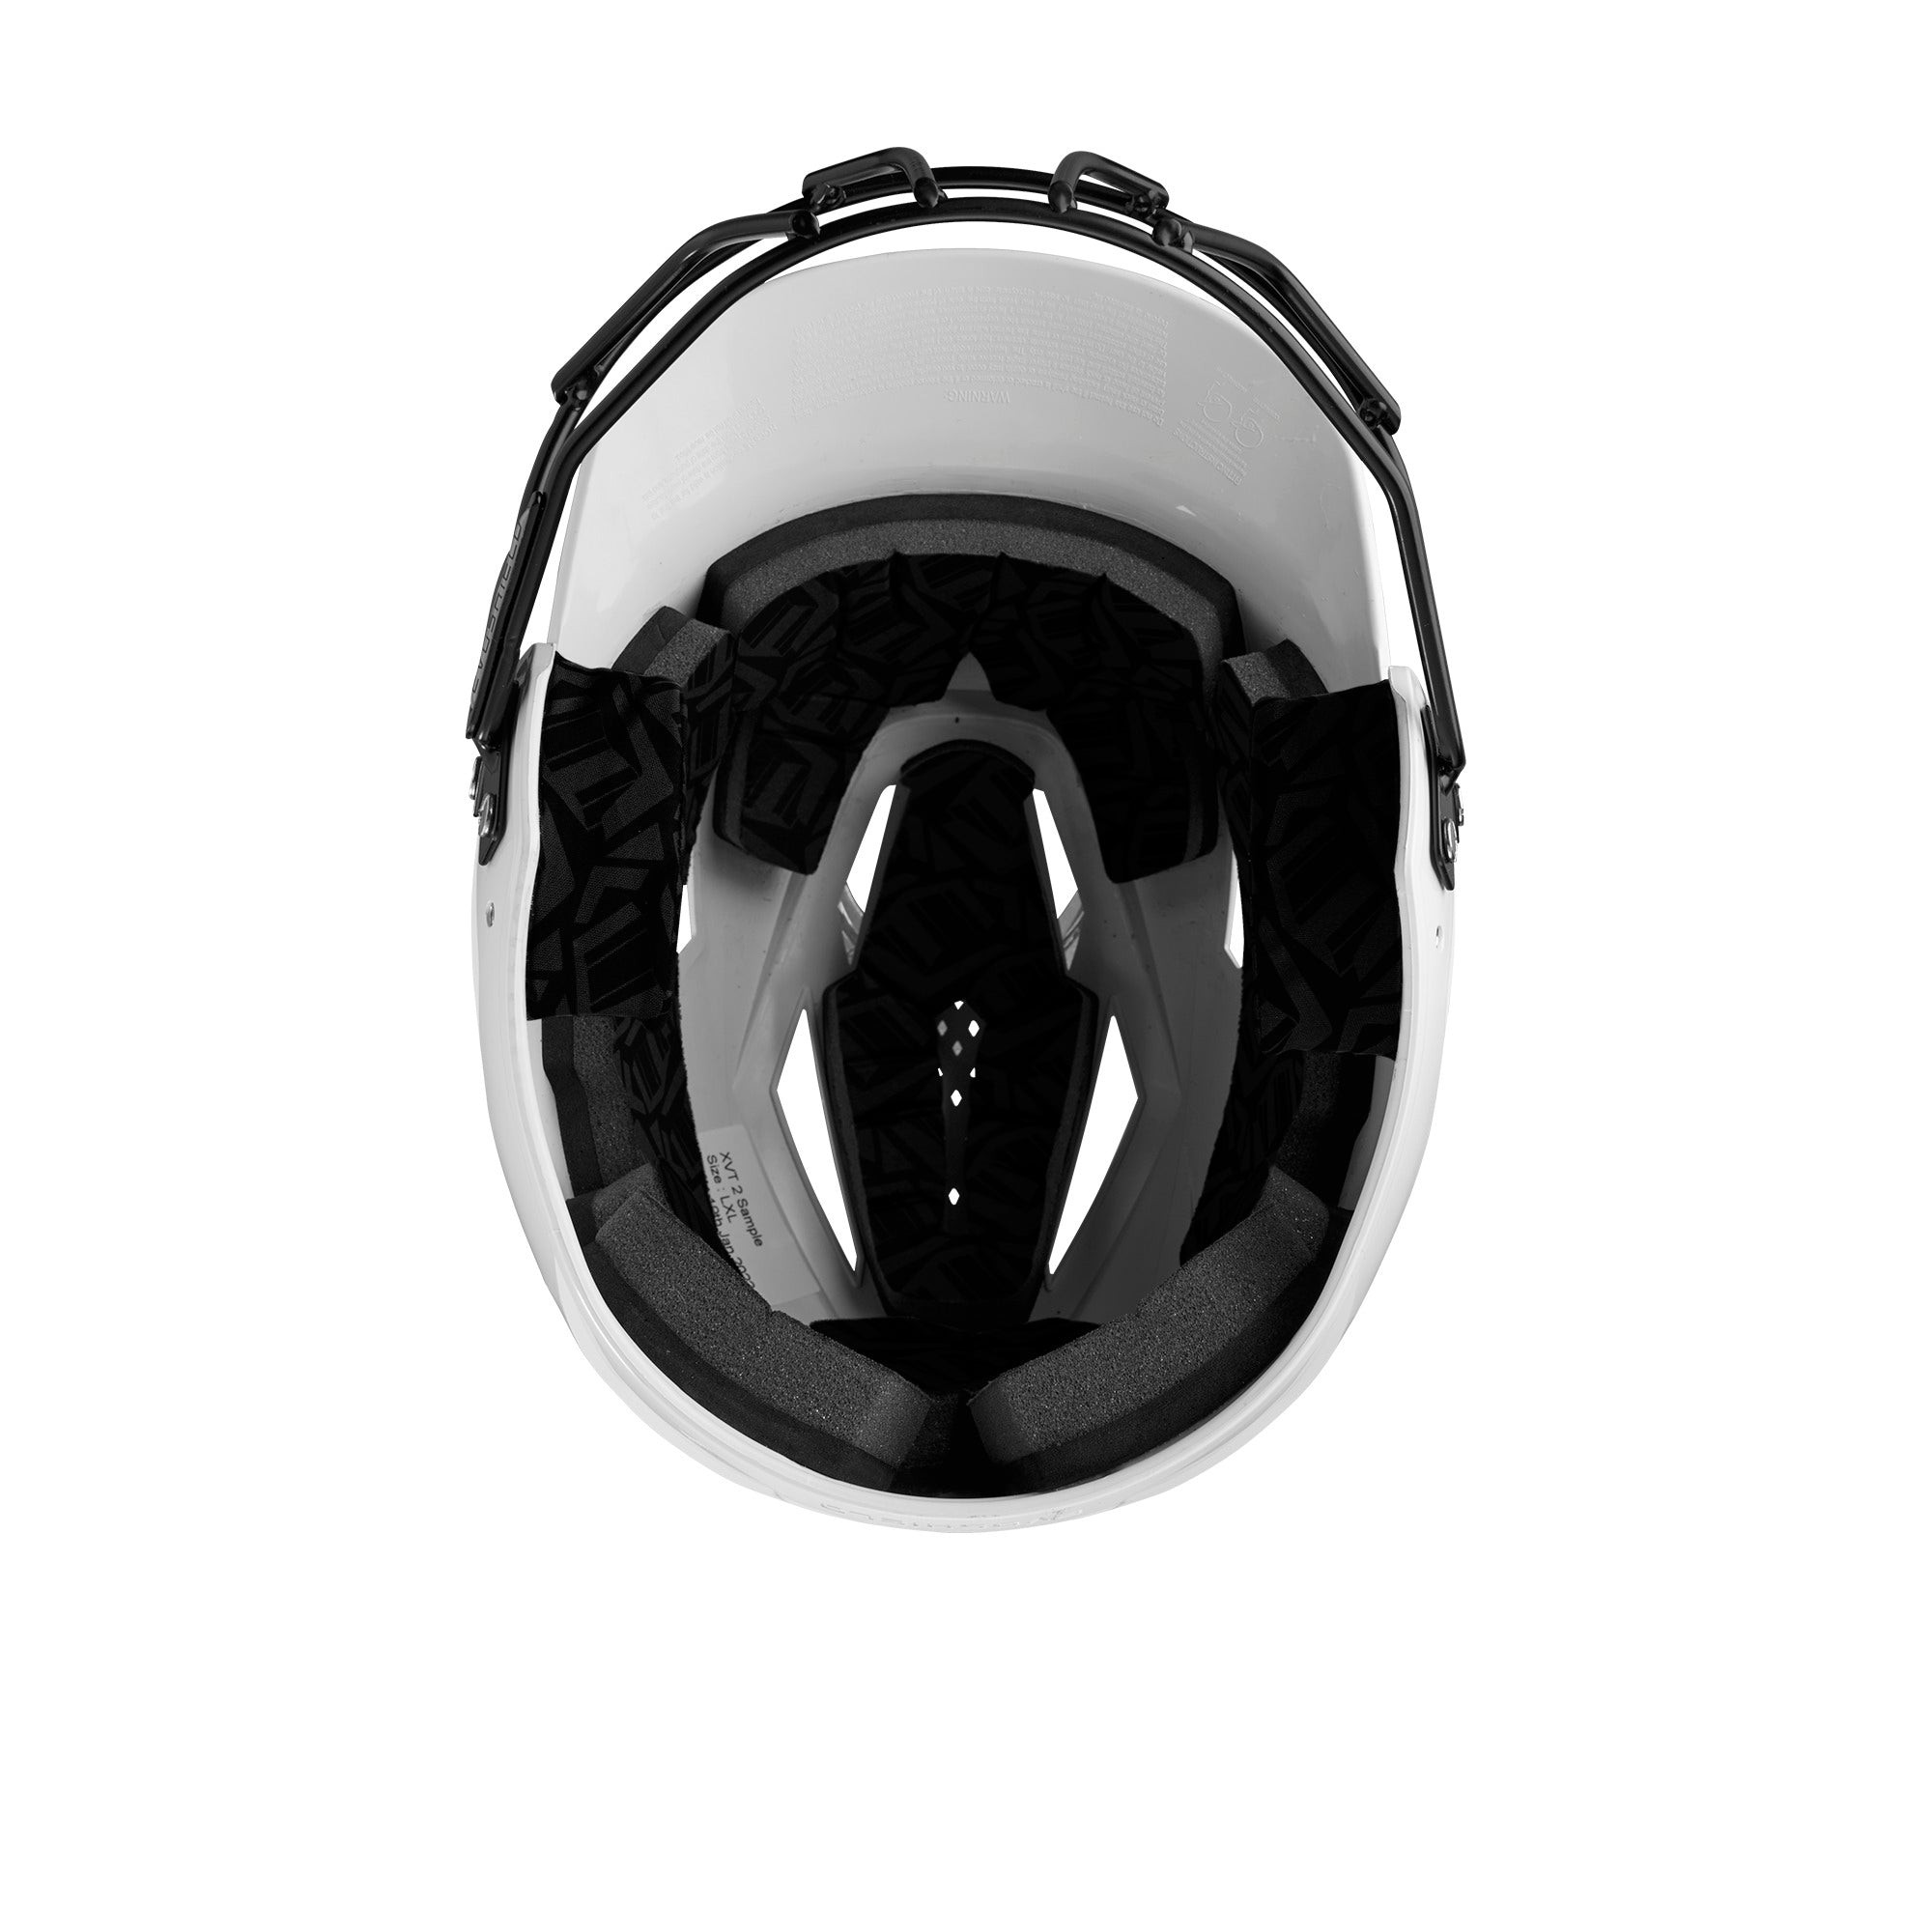 Evoshield XVT 2.0 Gloss Batting Helmet With Facemask - White